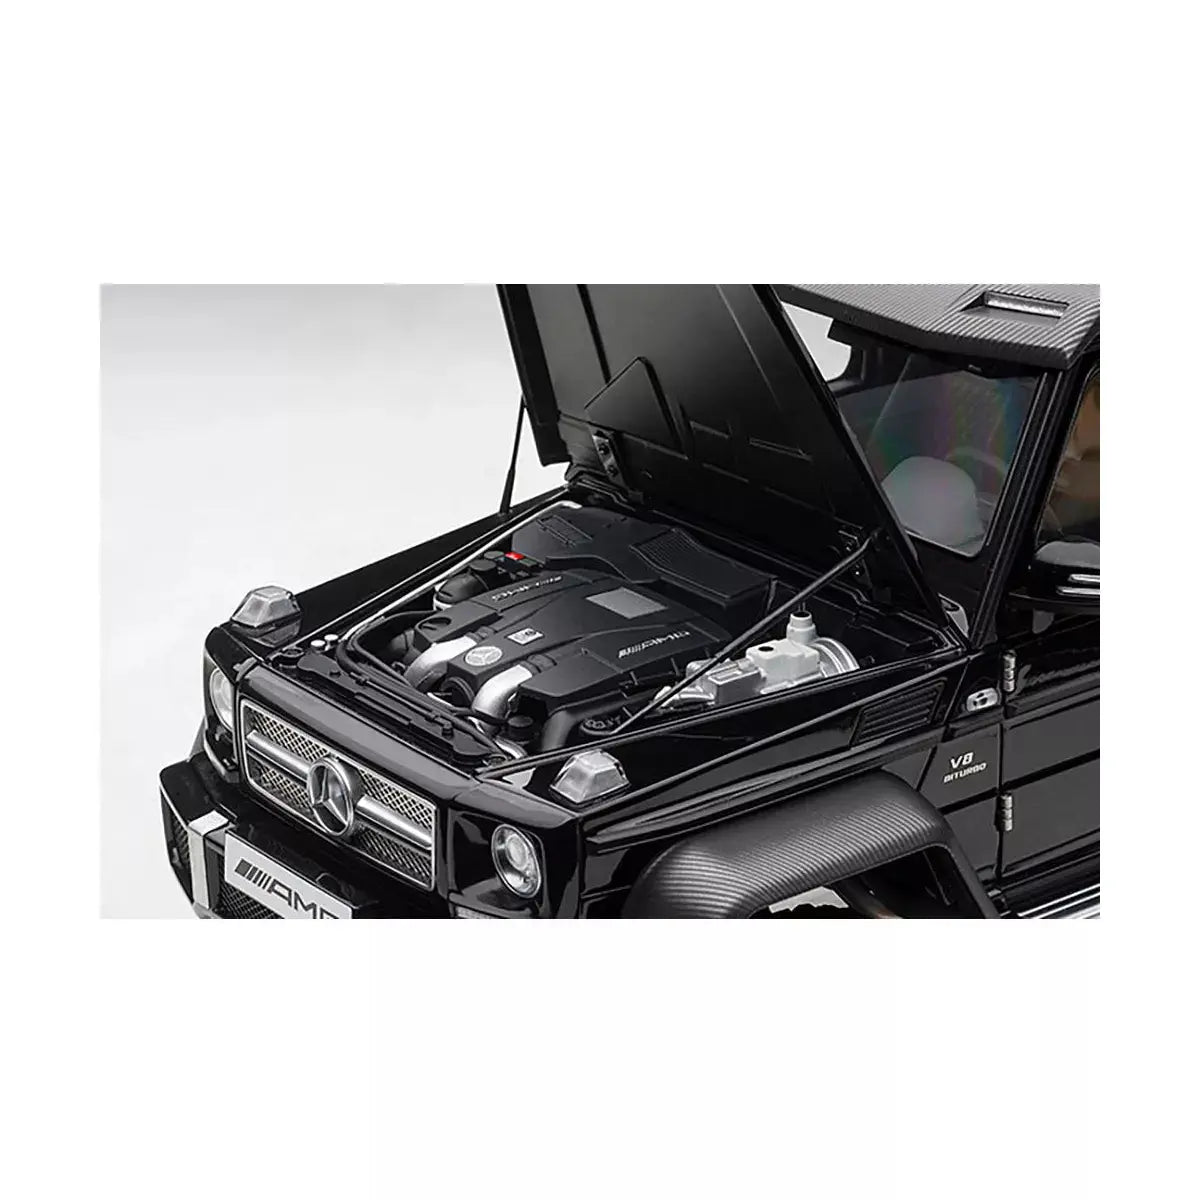 Mercedes Benz G63 AMG 6x6 - Perfect Diecast